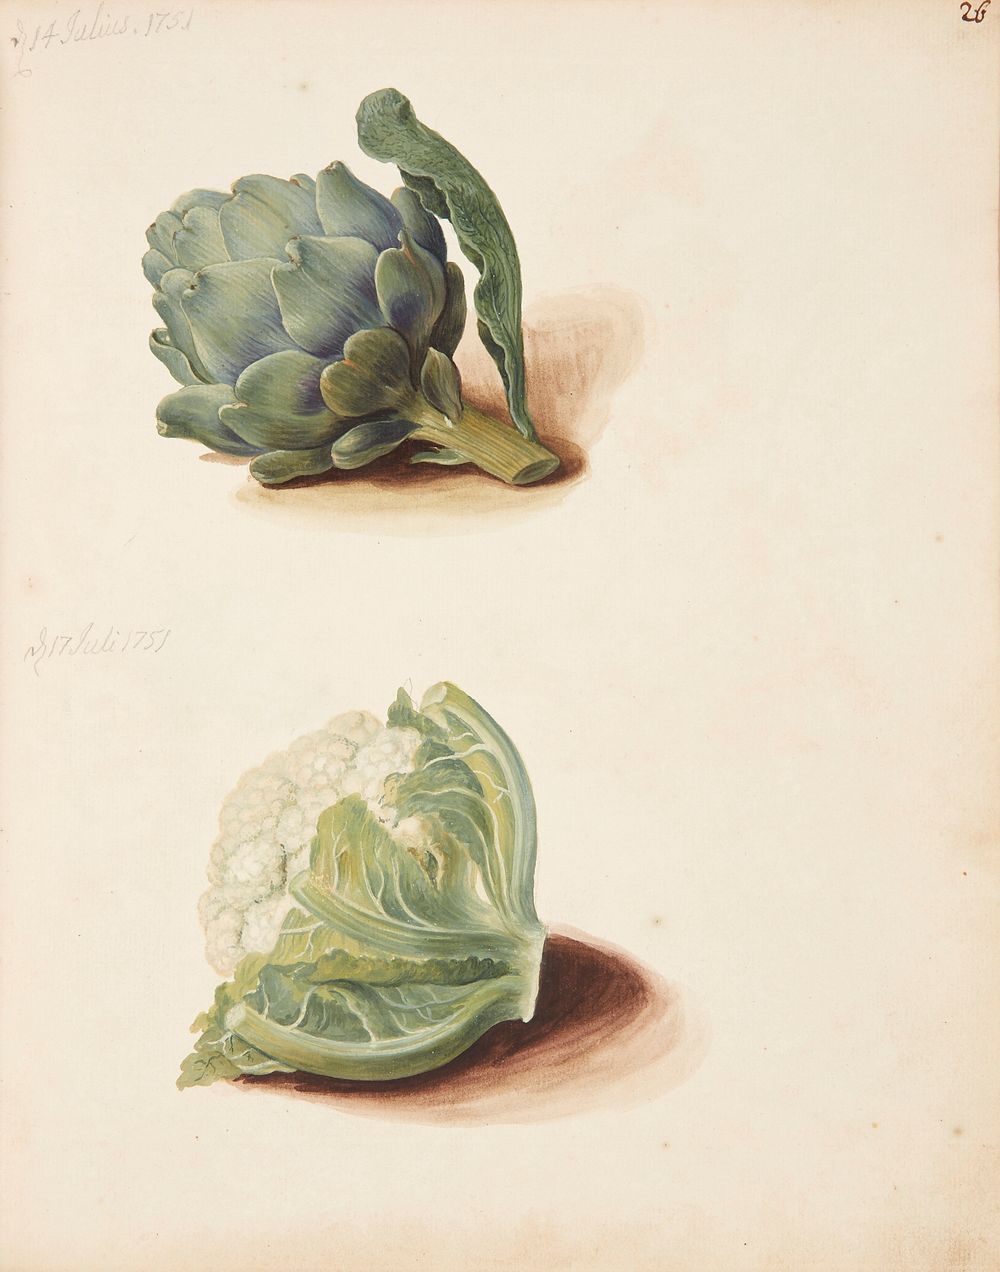 Study of artichoke and cauliflower head by Johanna Fosie